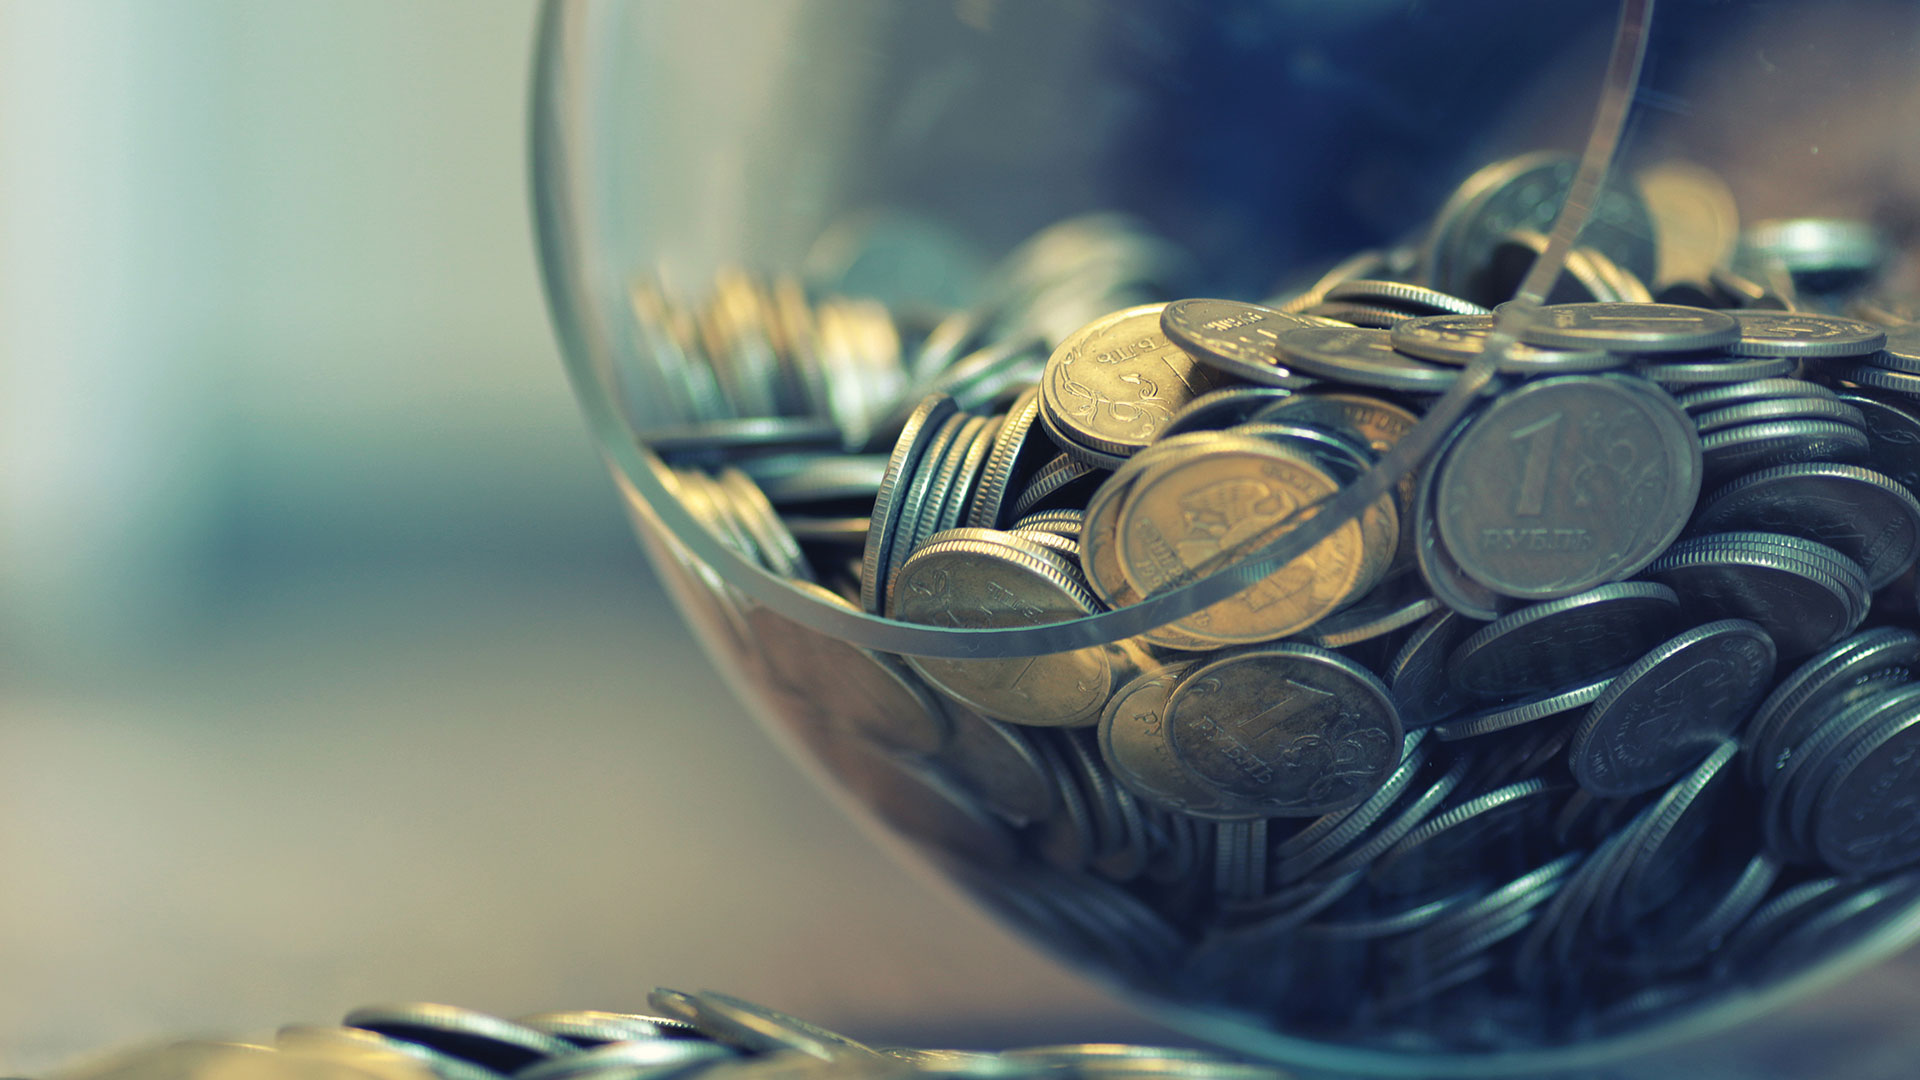 Coins in piggy bank vase